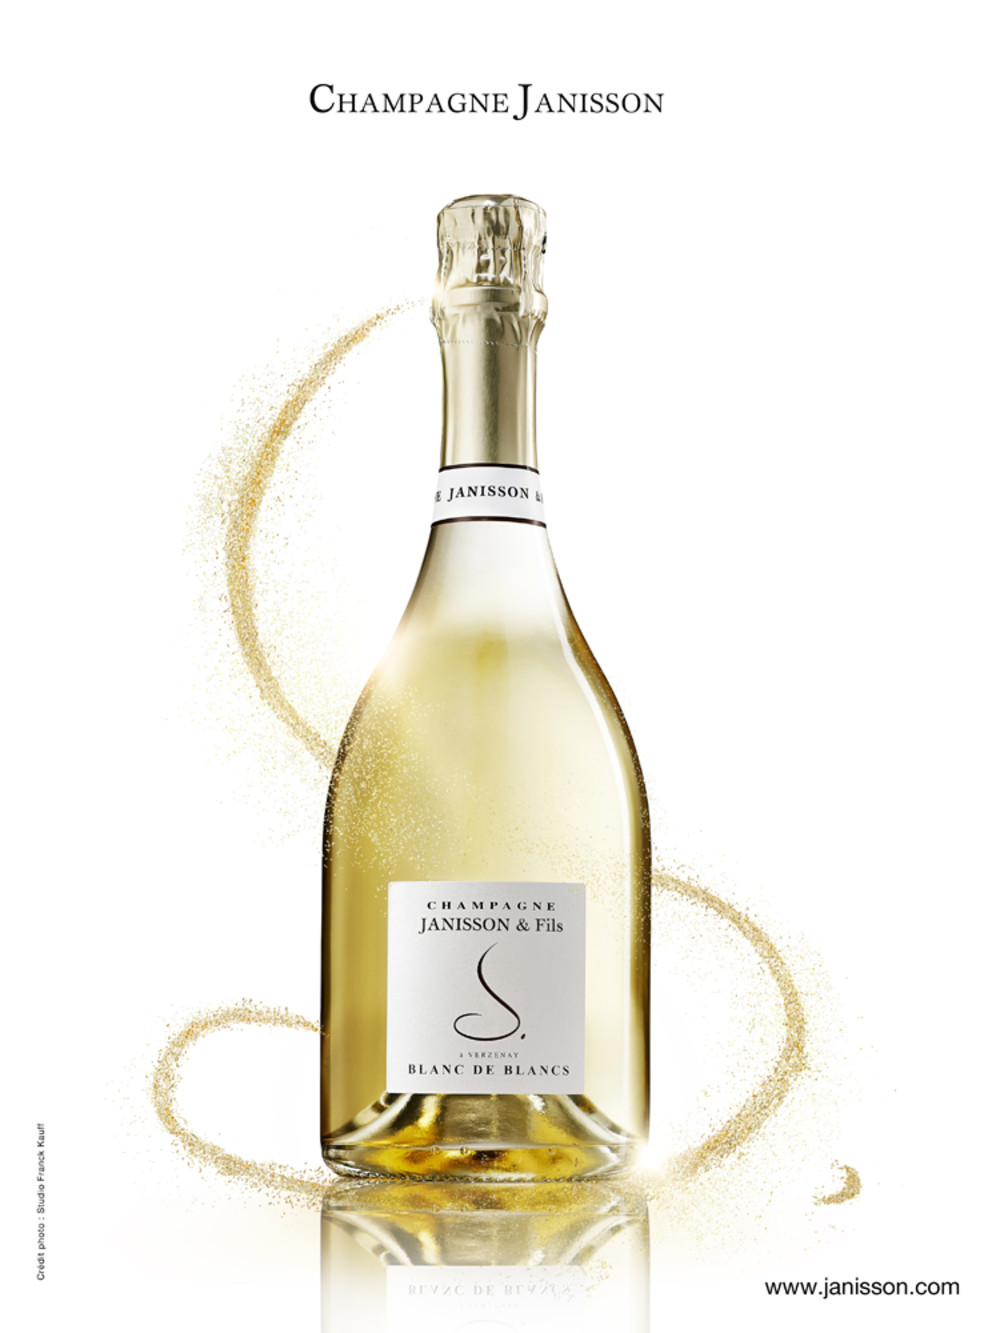 Champagne JANISSON_Blanc de Blancs_PUB_1.jpg